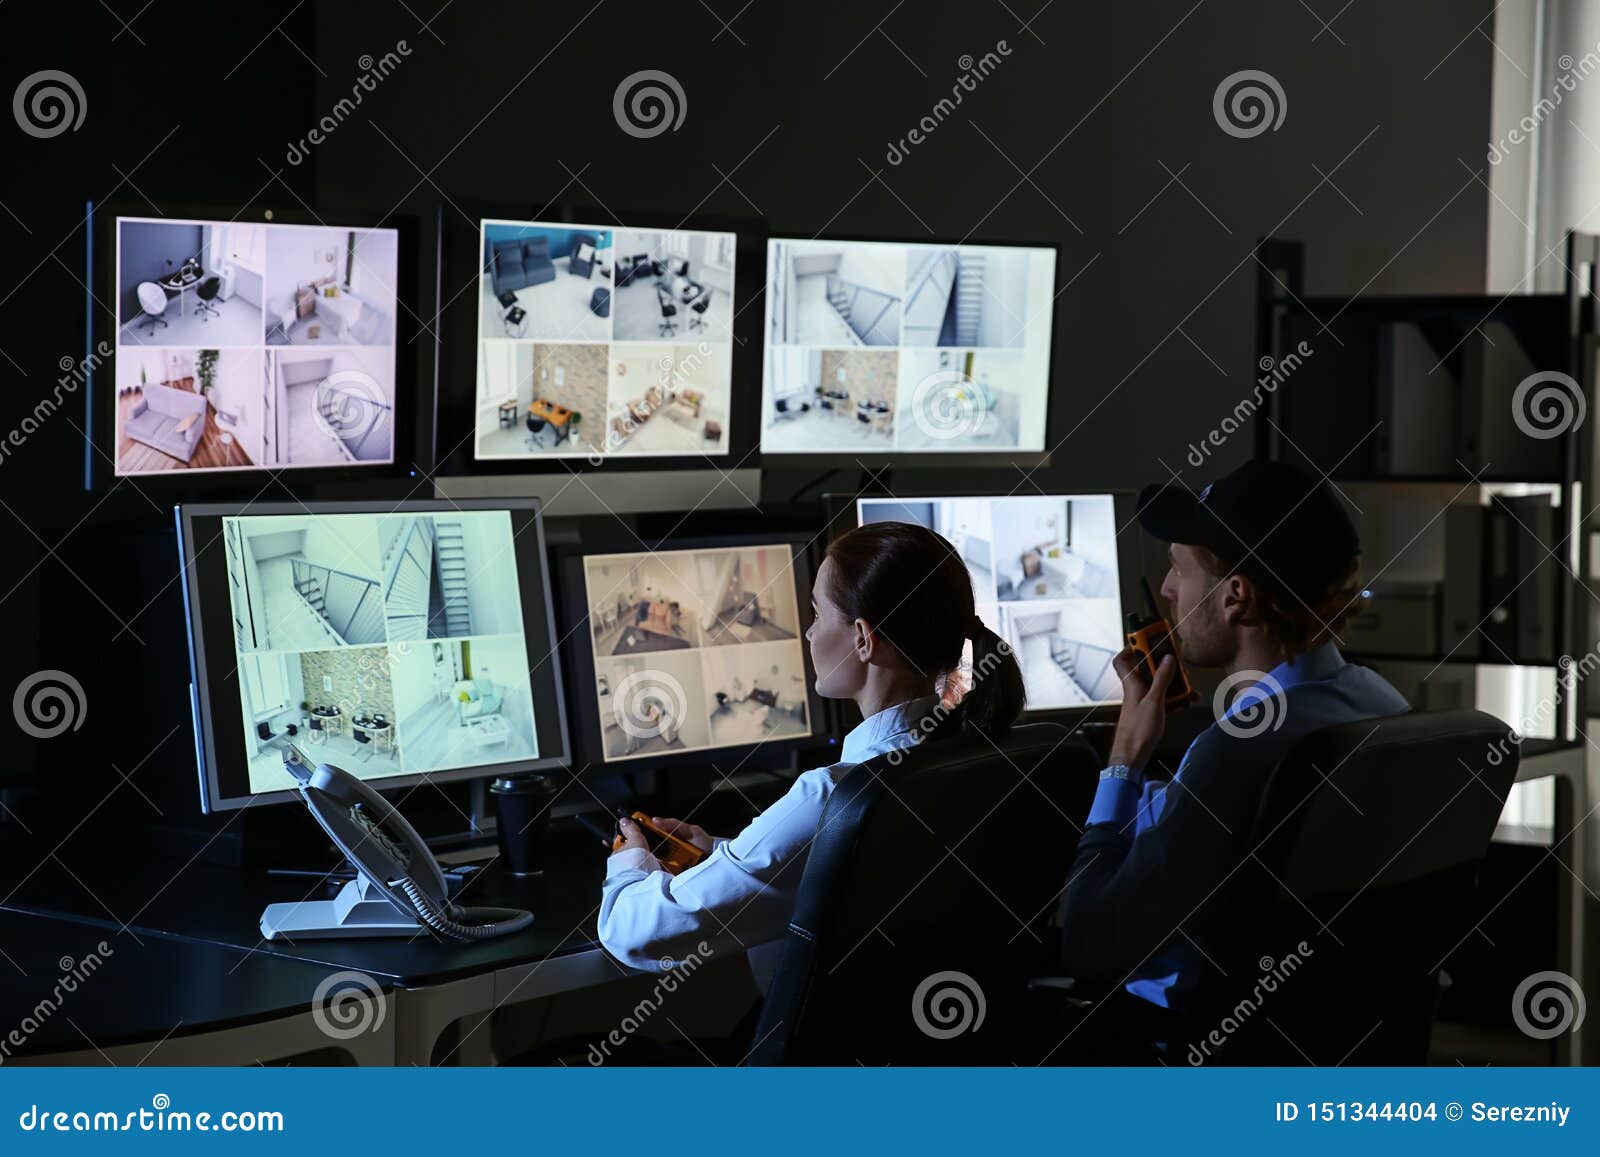 security guards monitoring modern cctv cameras in surveillance room